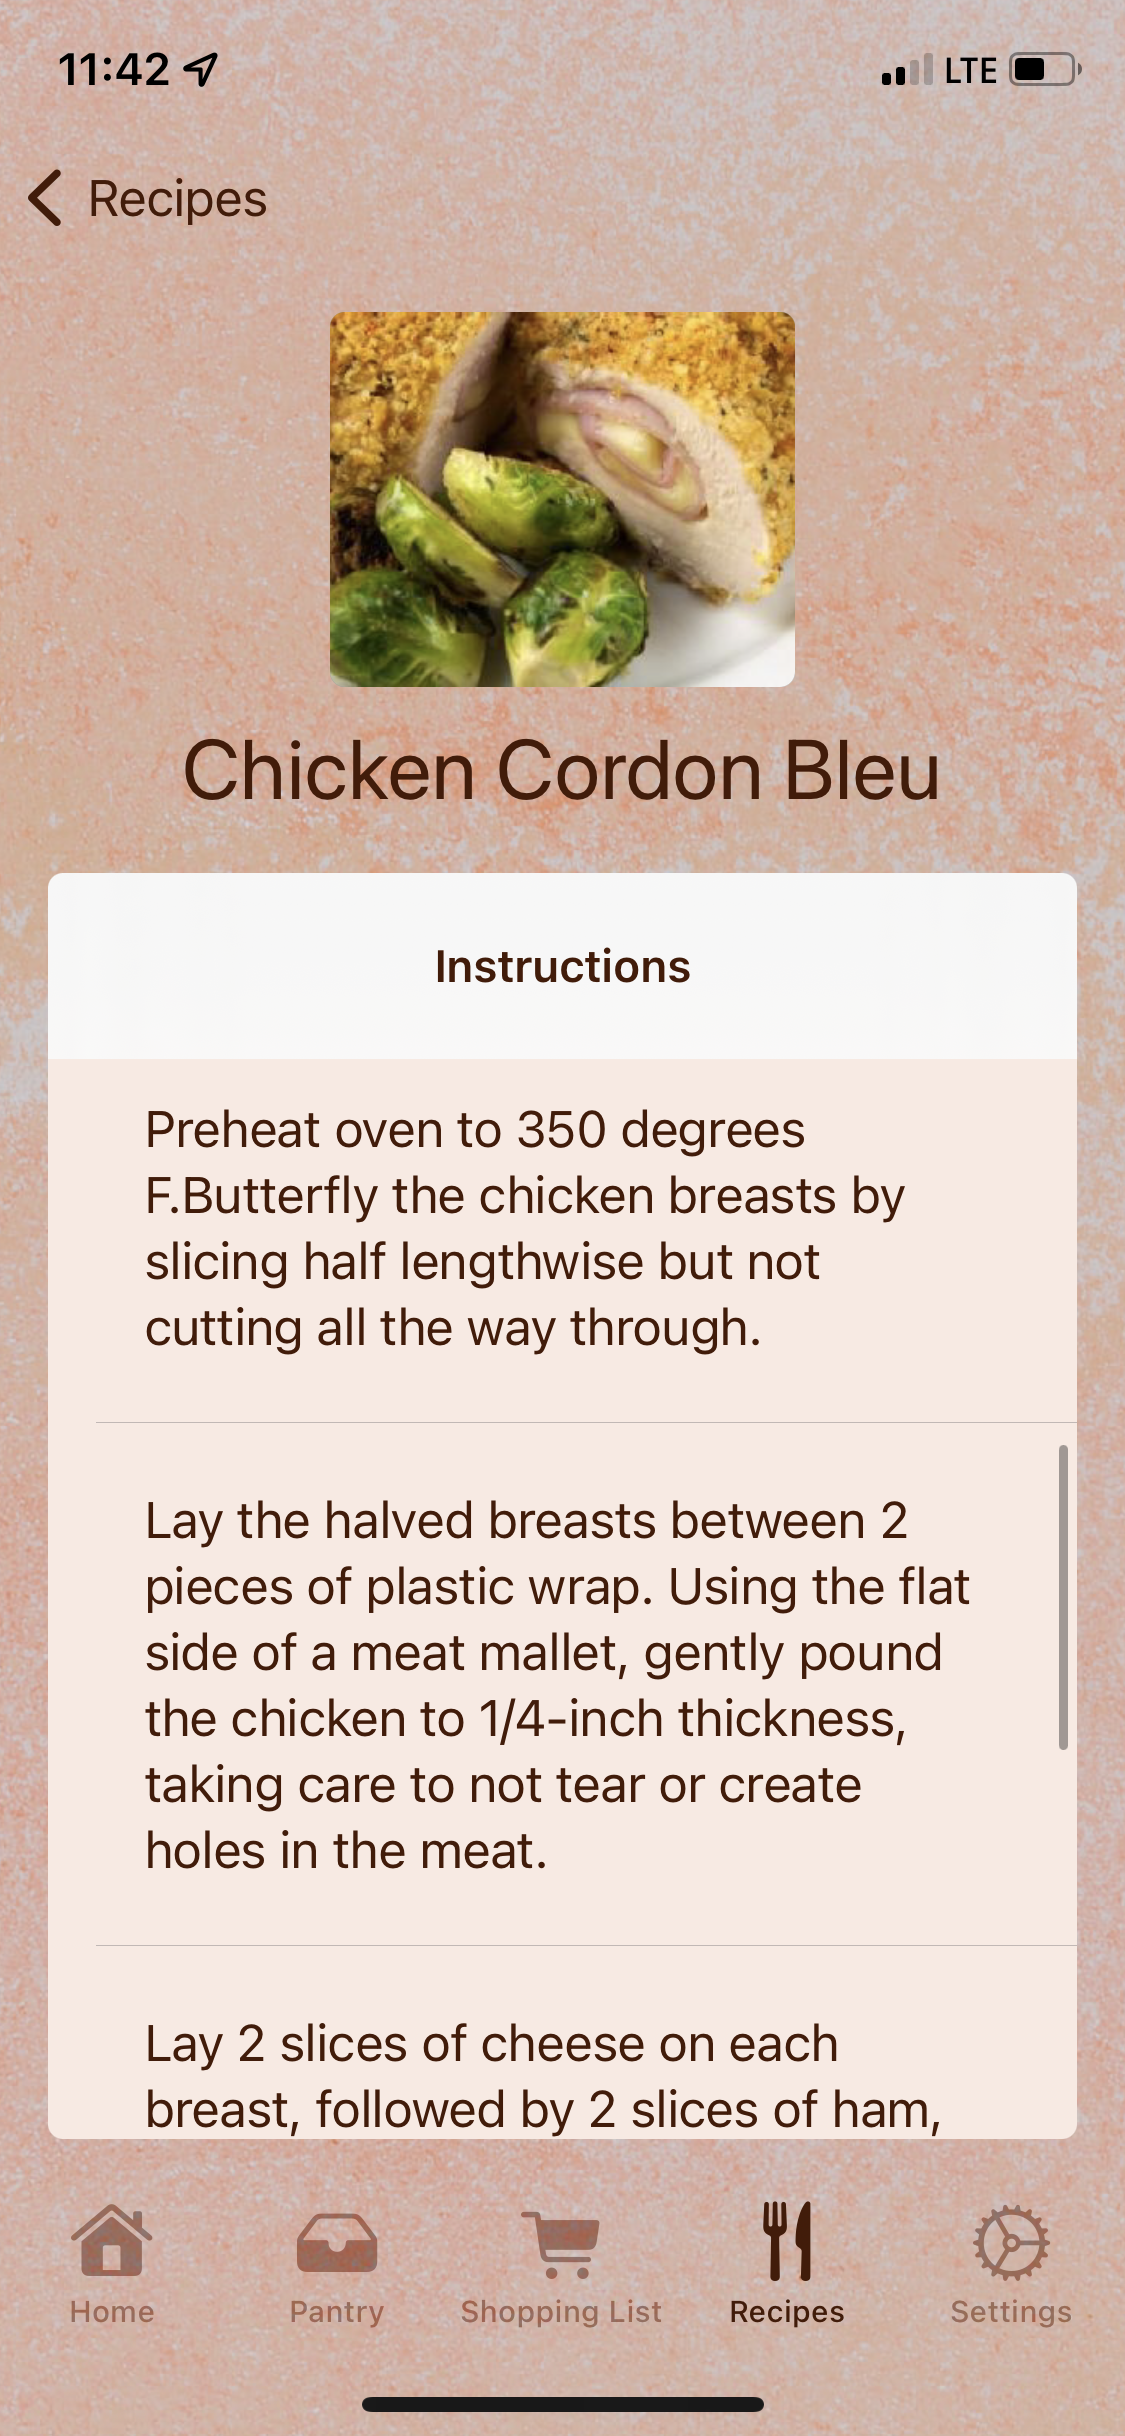 Recipes search instructions screenshot